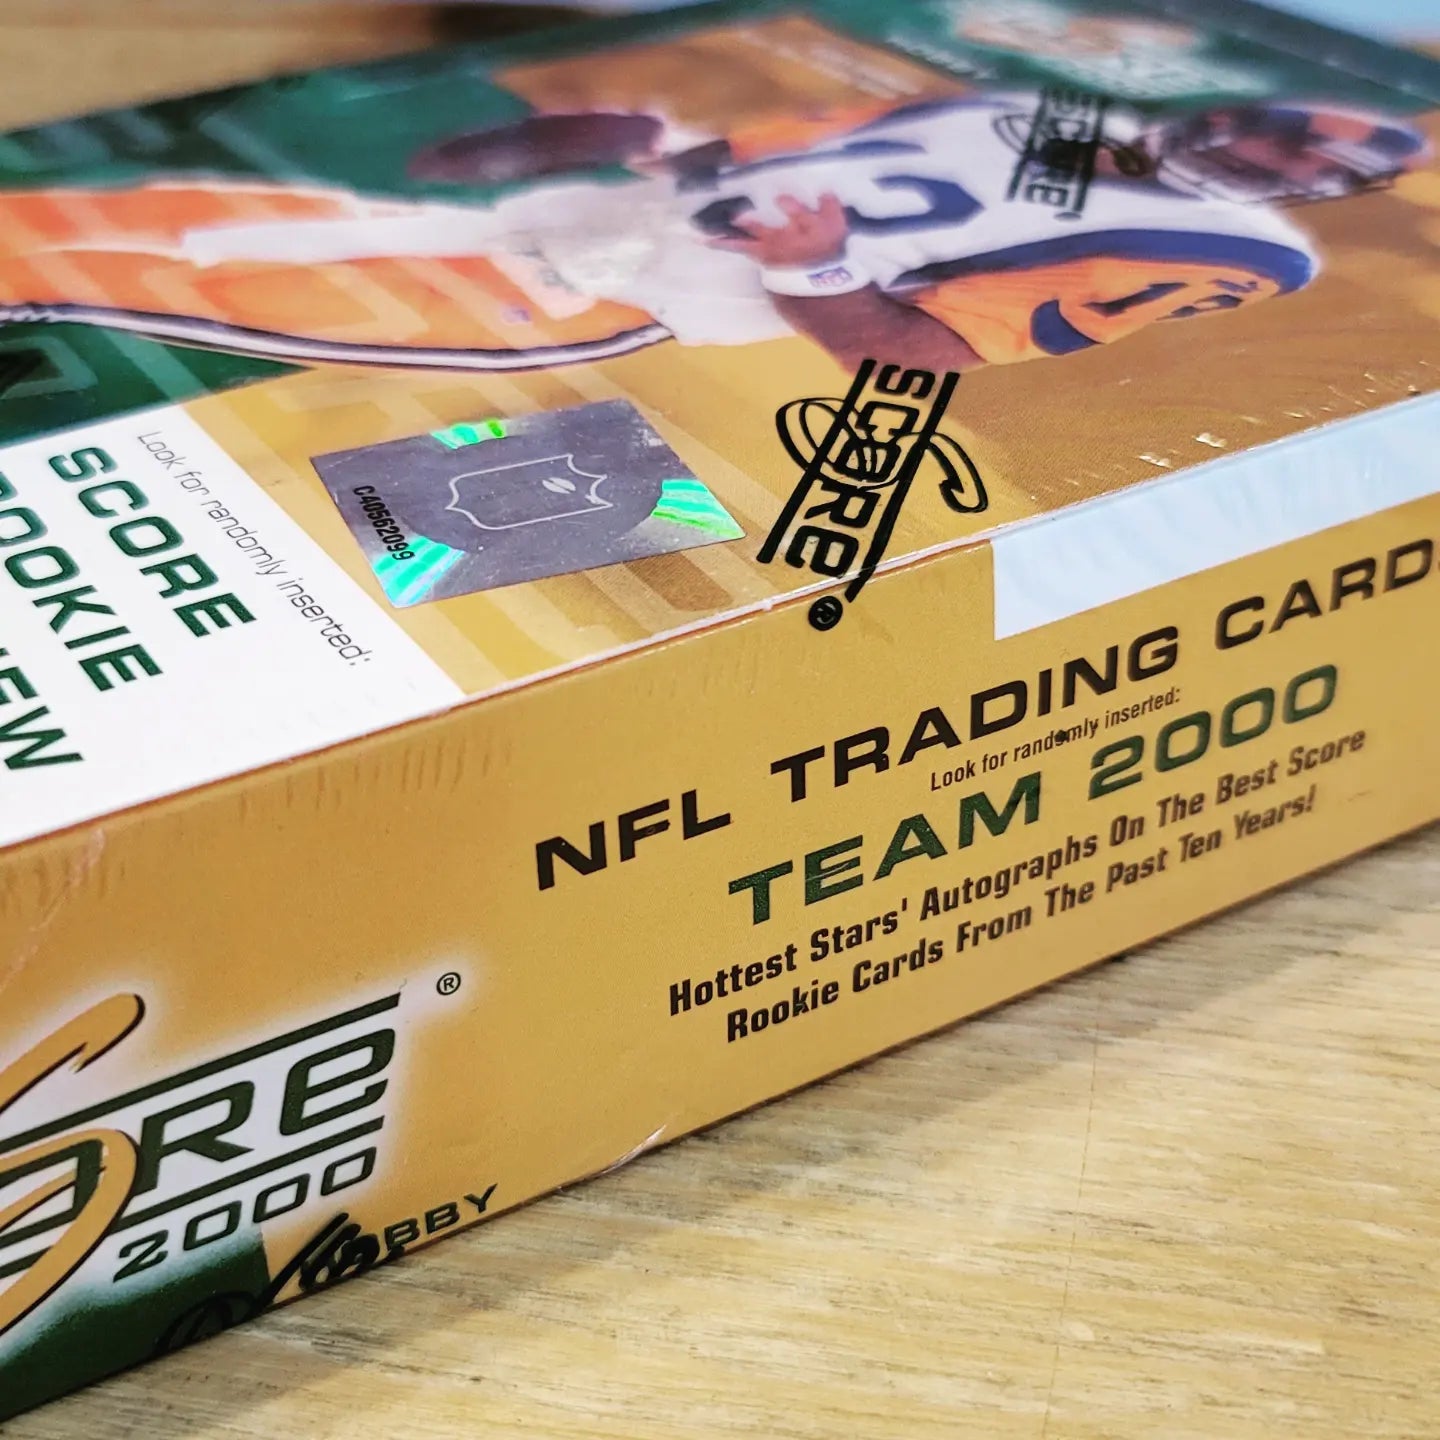 2000 Score Football Hobby Box (36 Packs) Possible Tom Brady Autograph